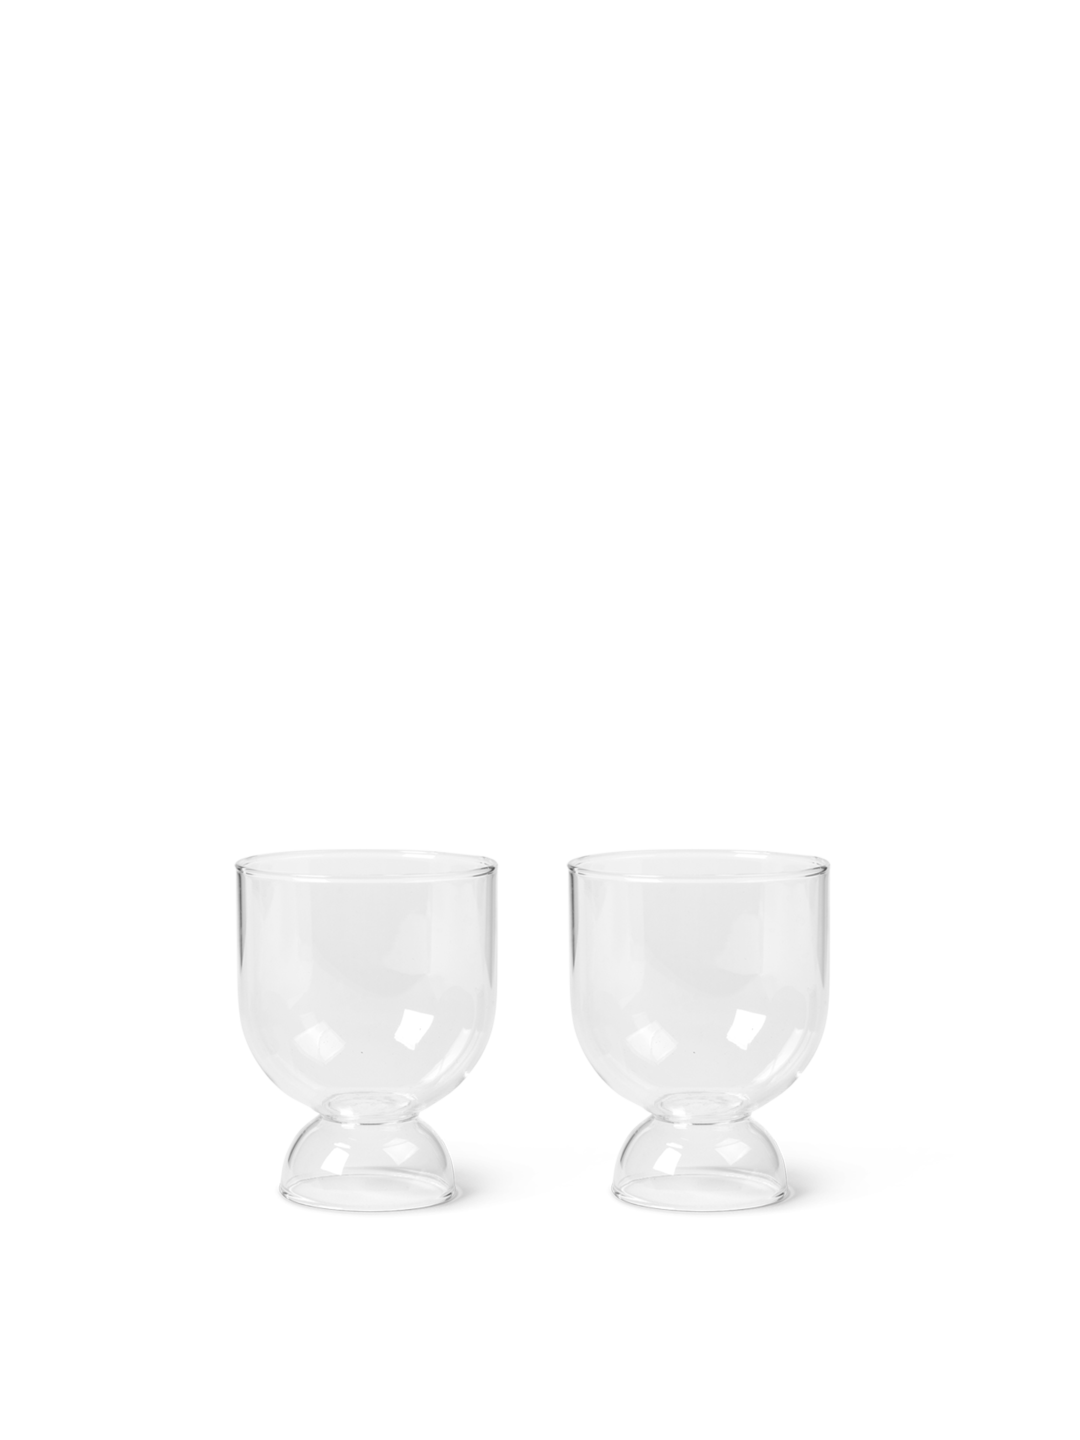 Ferm Living - Host White Wine Glasses - Set of 2 - Blush